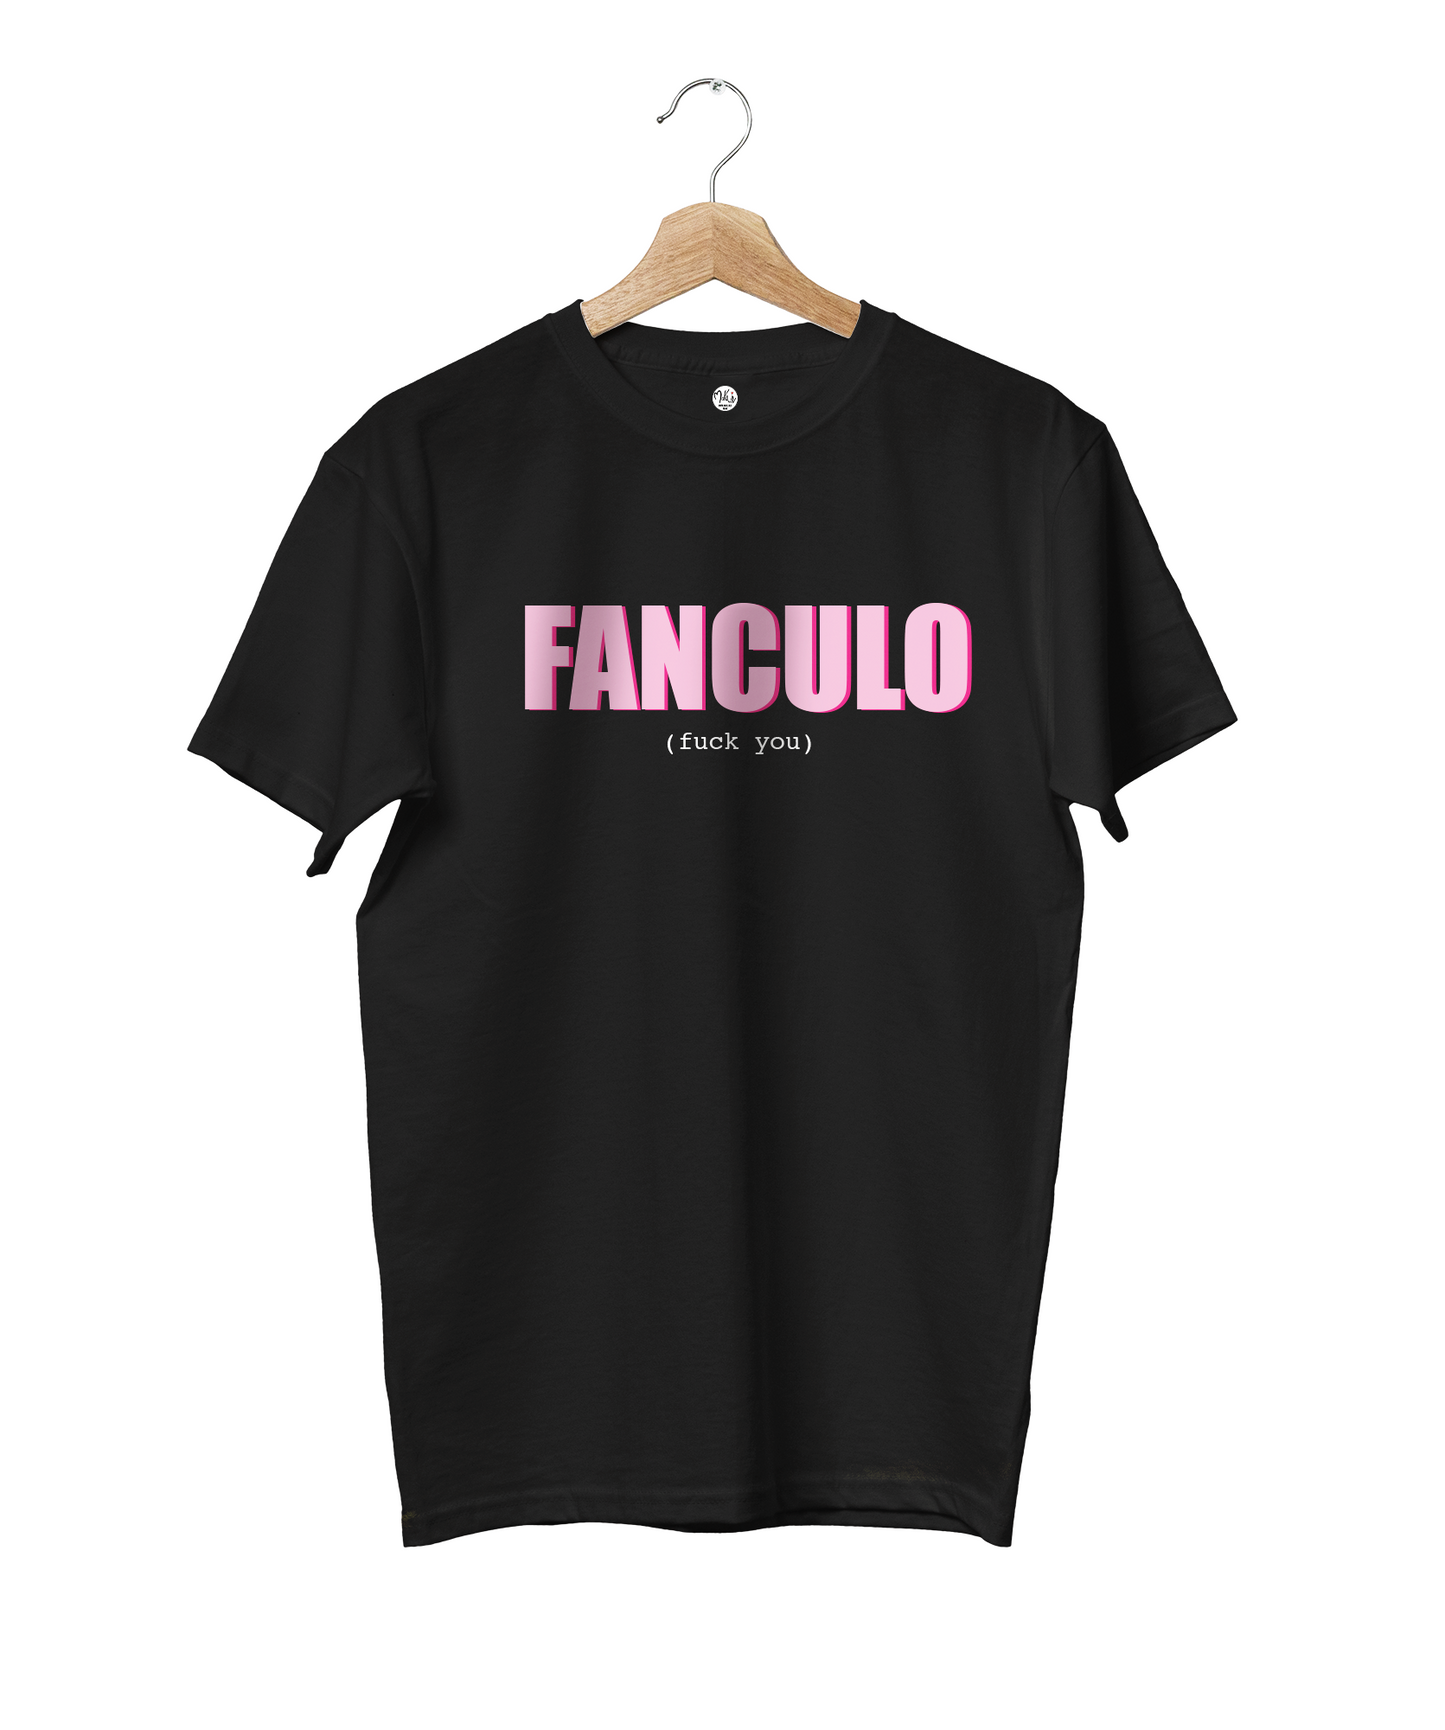 T-shirt Fanculo